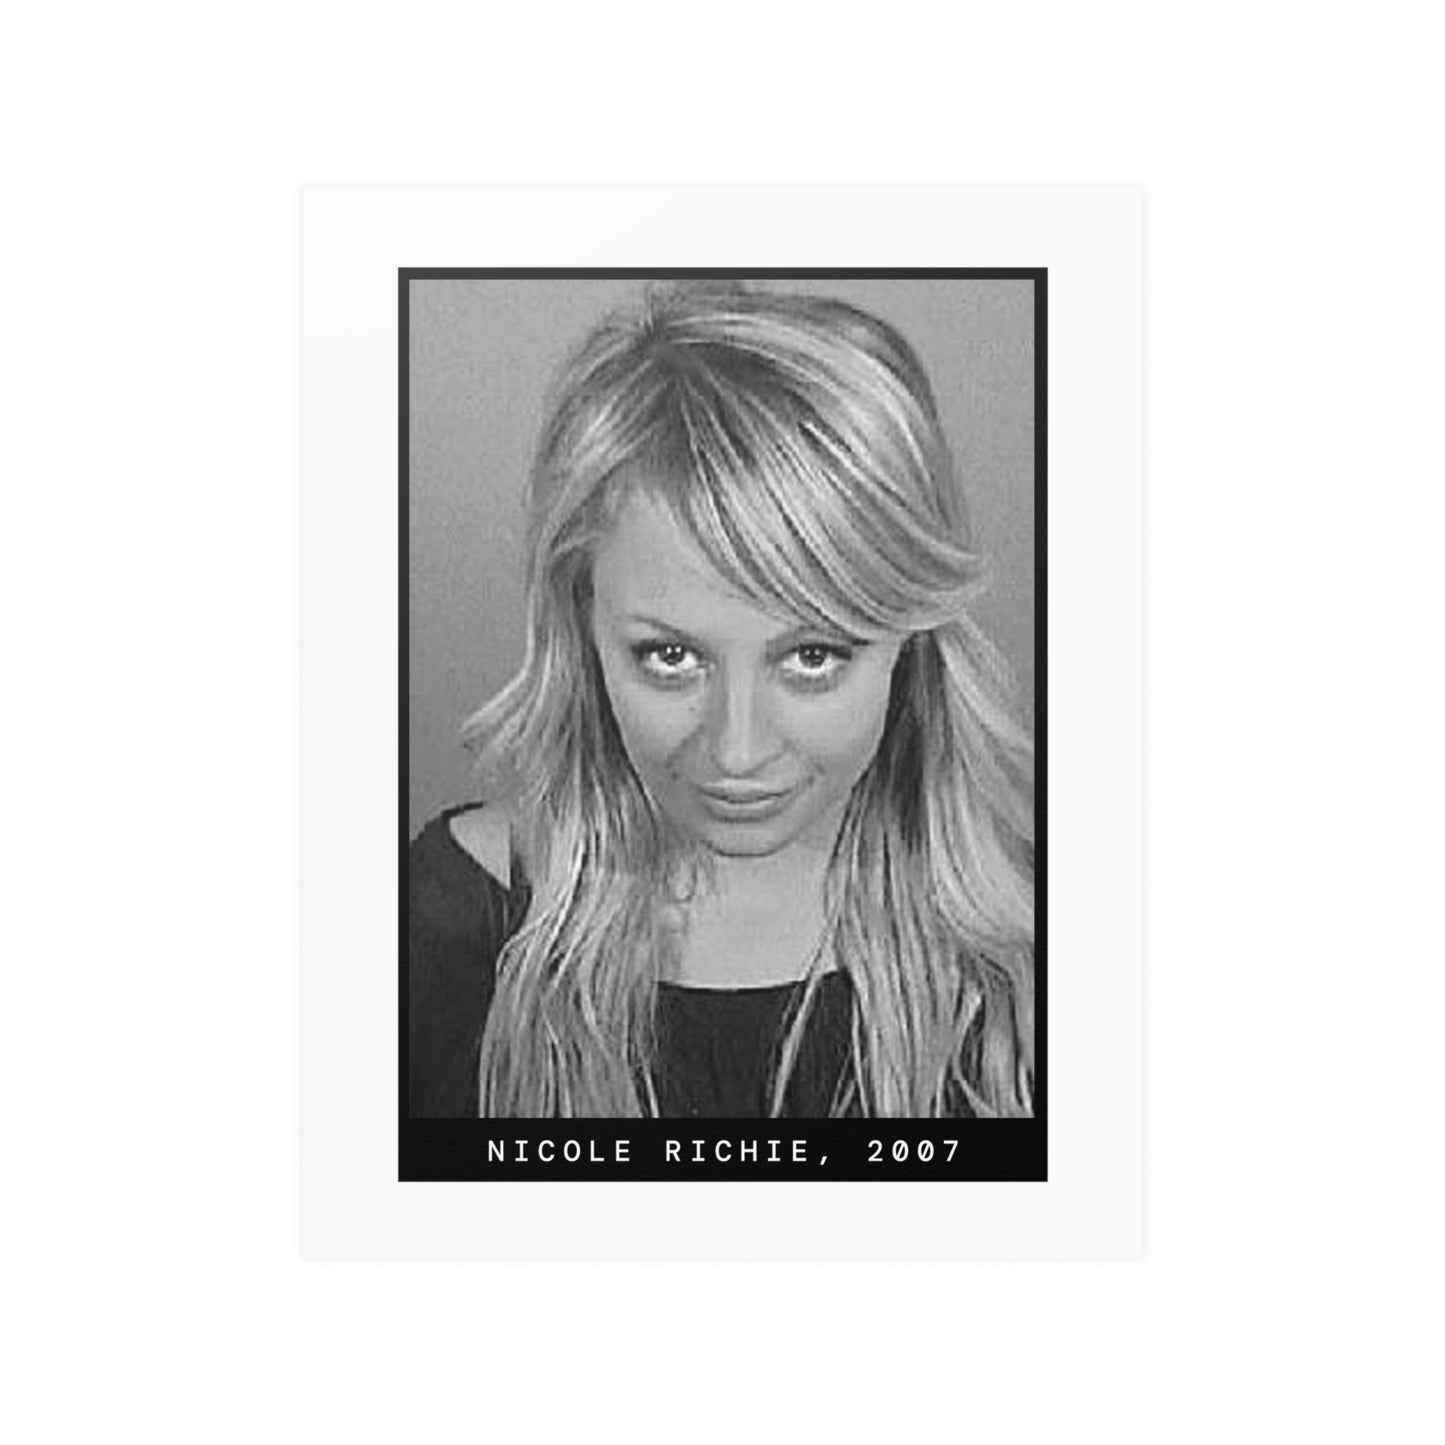 Nicole Richie, 2007 Celebrity Mugshot Poster